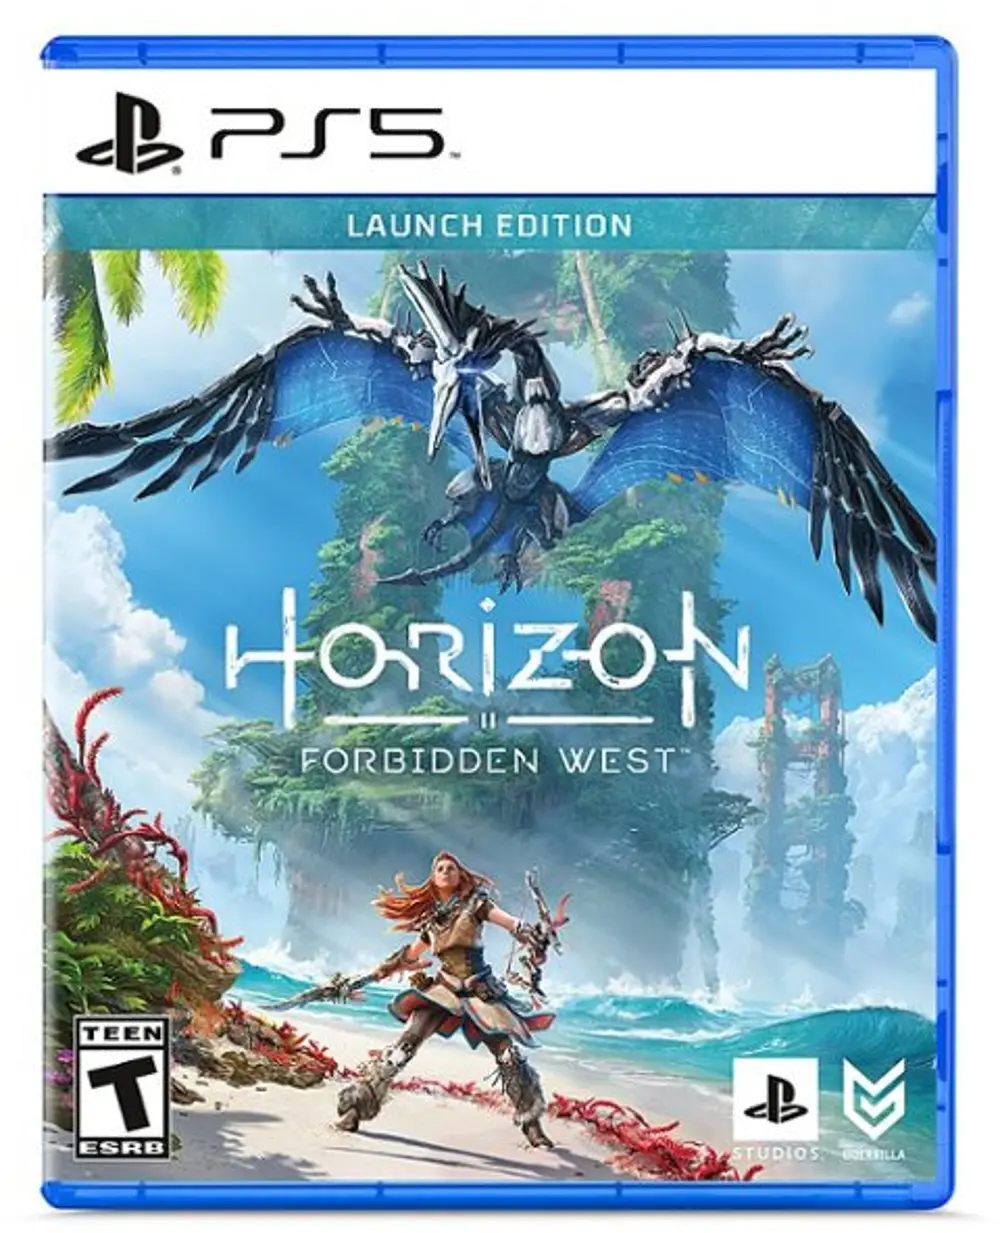 PS5/HORIZON_FBN_WEST Horizon Forbidden West Launch Edition - PS5-1